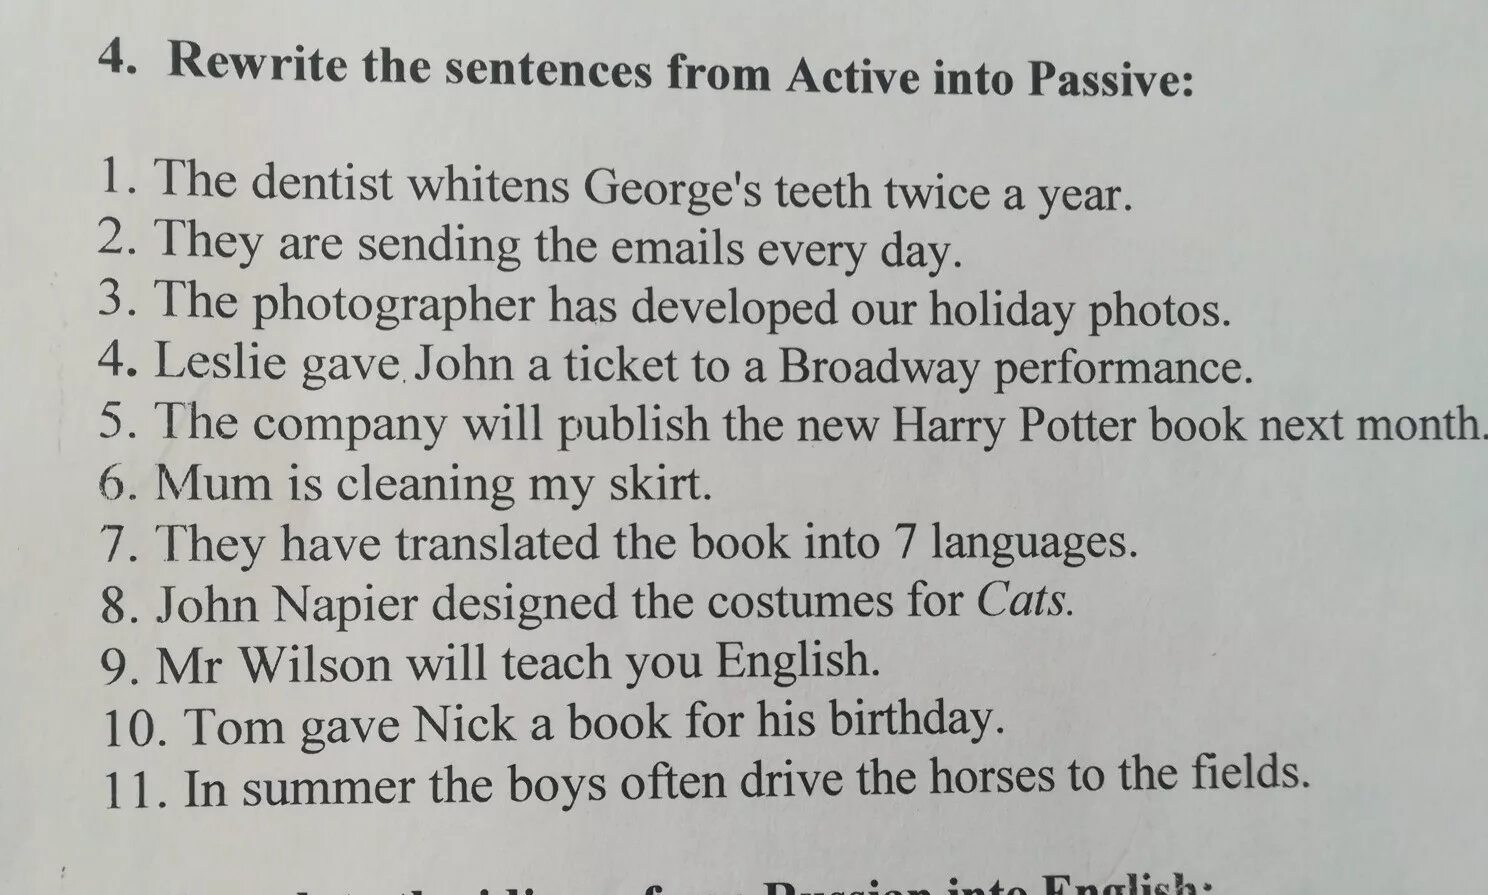 Rewrite the sentences in passive form. Rewrite the sentences in the Passive. Rewrite the Active sentences in the Passive. Rewrite the sentences in the Passive Voice. Put the sentences into Passive Voice.